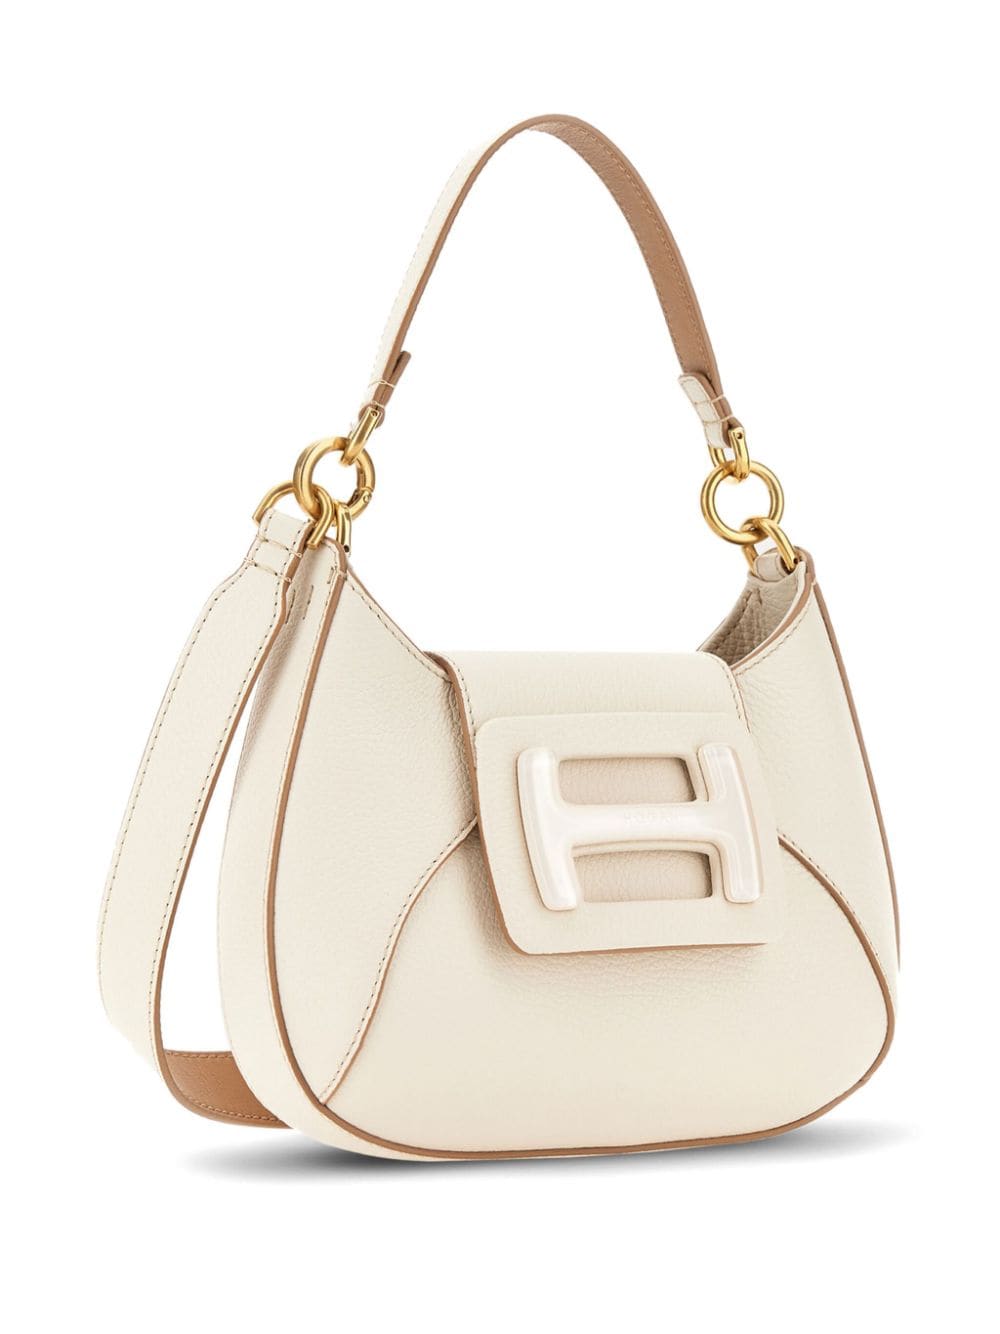 HOGAN Cream White Pebbled Leather Mini Hobo Handbag with Gold-Tone Accents and Detachable Strap